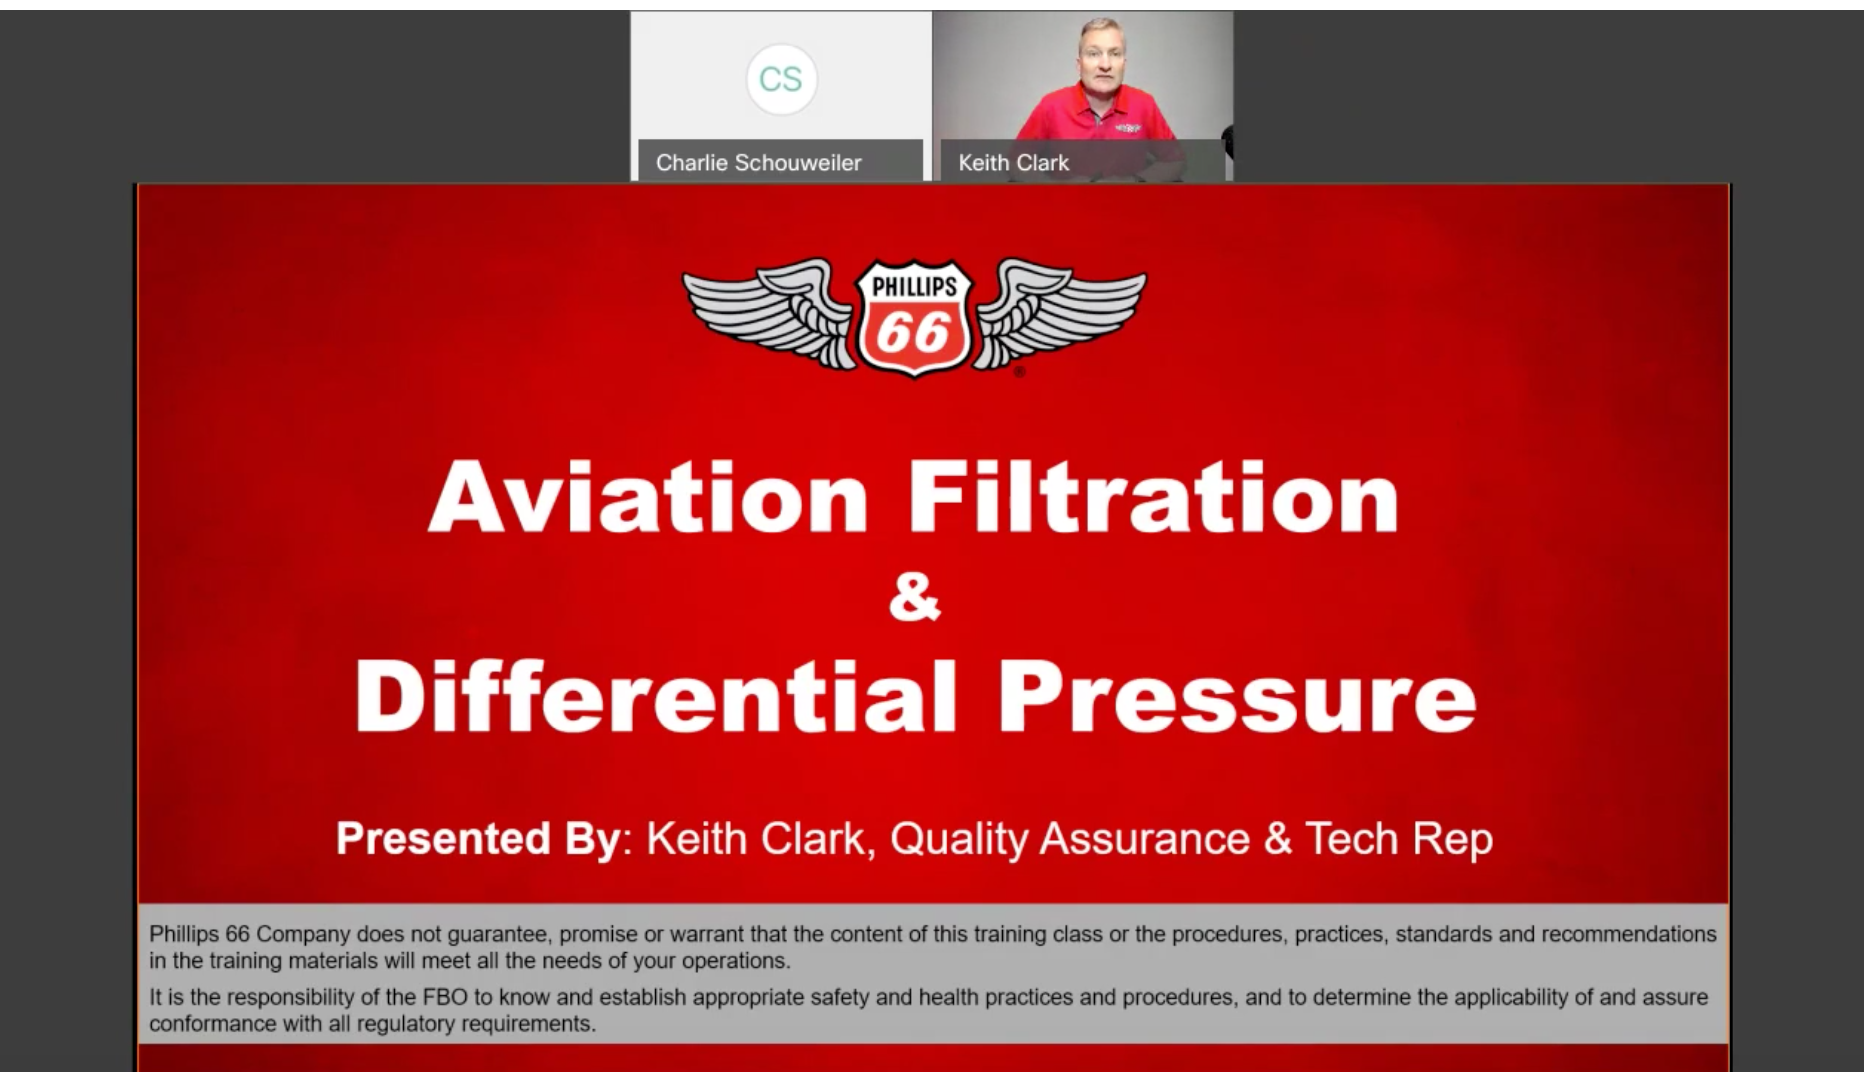 Aviation Filtration & Differential Pressure Video